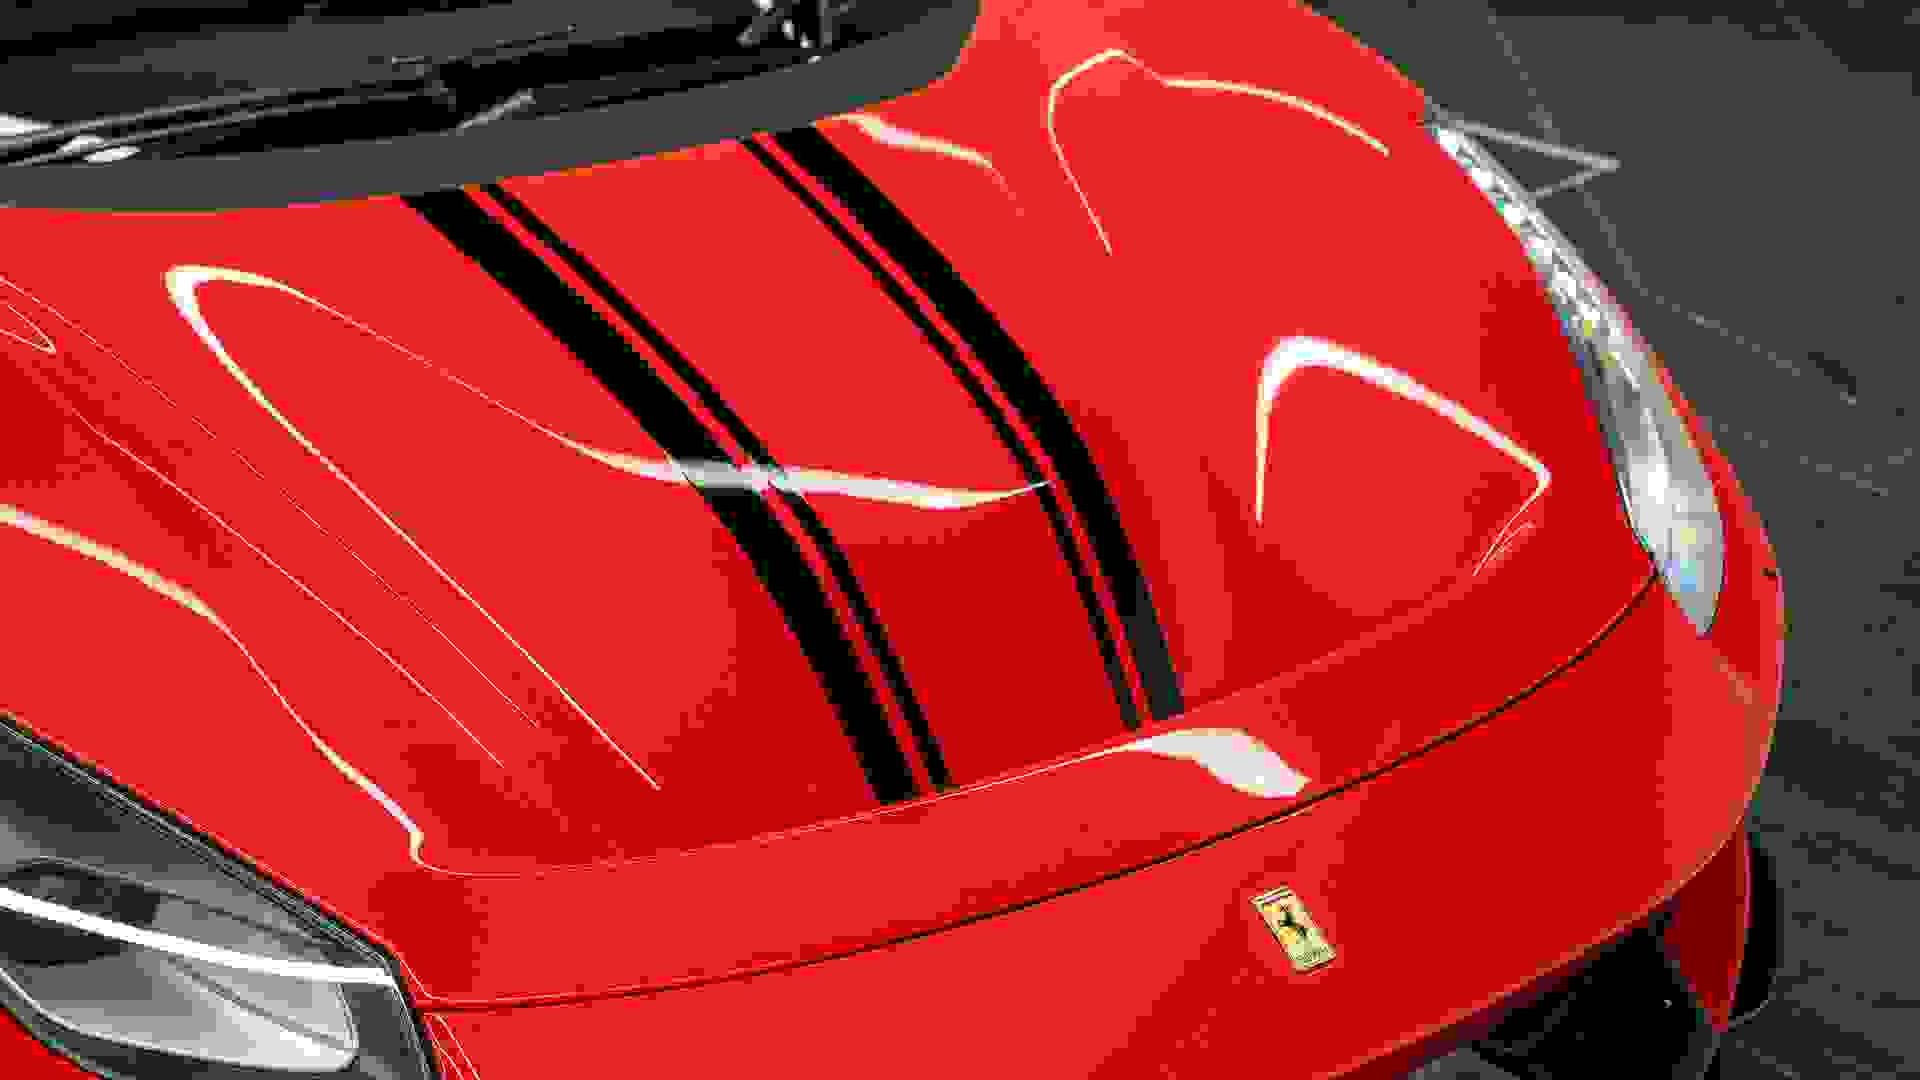 Ferrari 488 Photo 5739b168-0a80-4aff-9460-d9bdcbf2cc5c.jpg